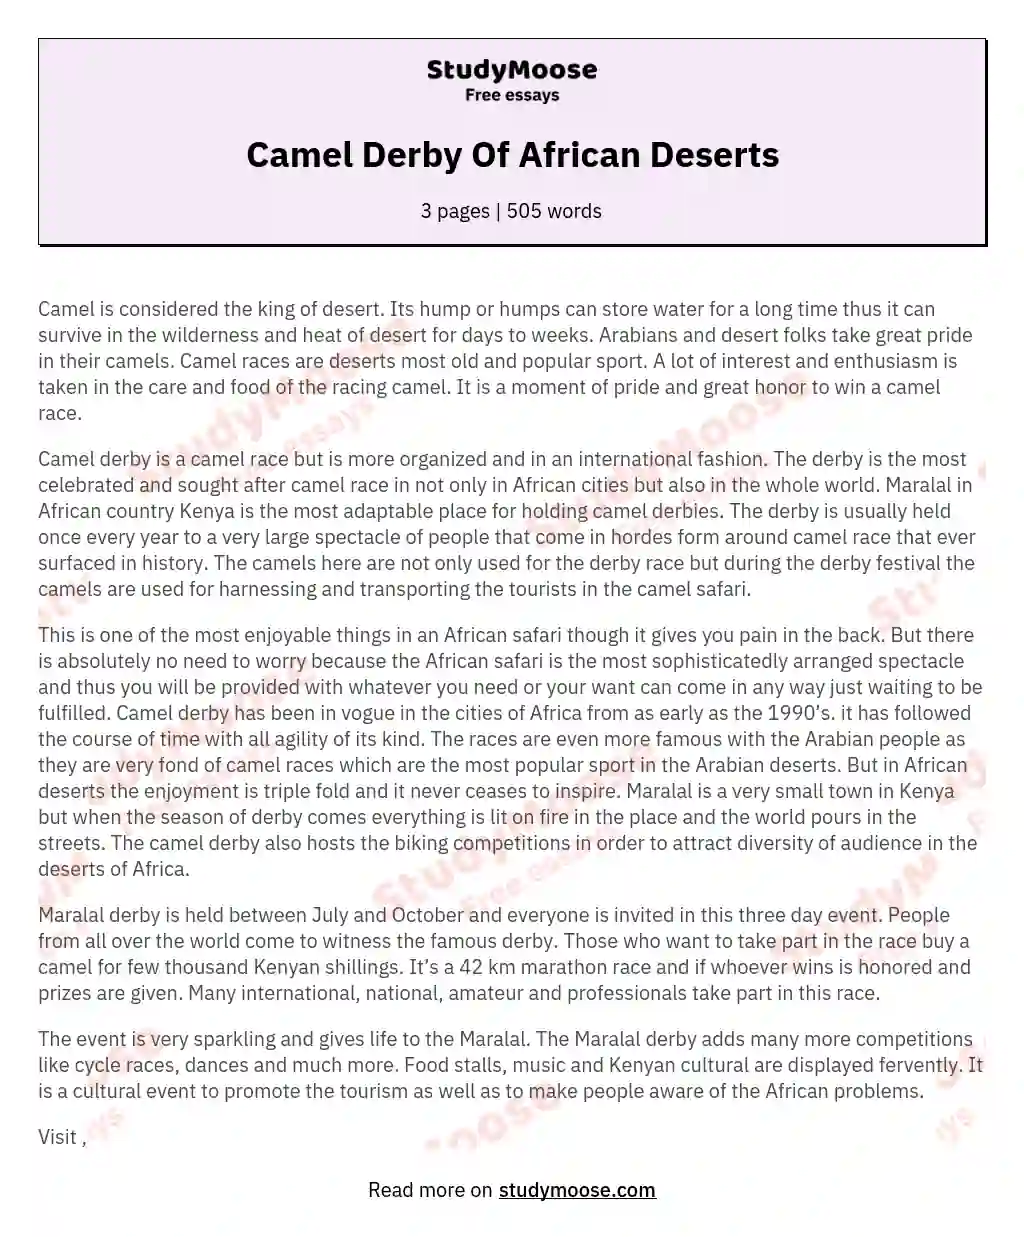 Camel Derby Of African Deserts essay